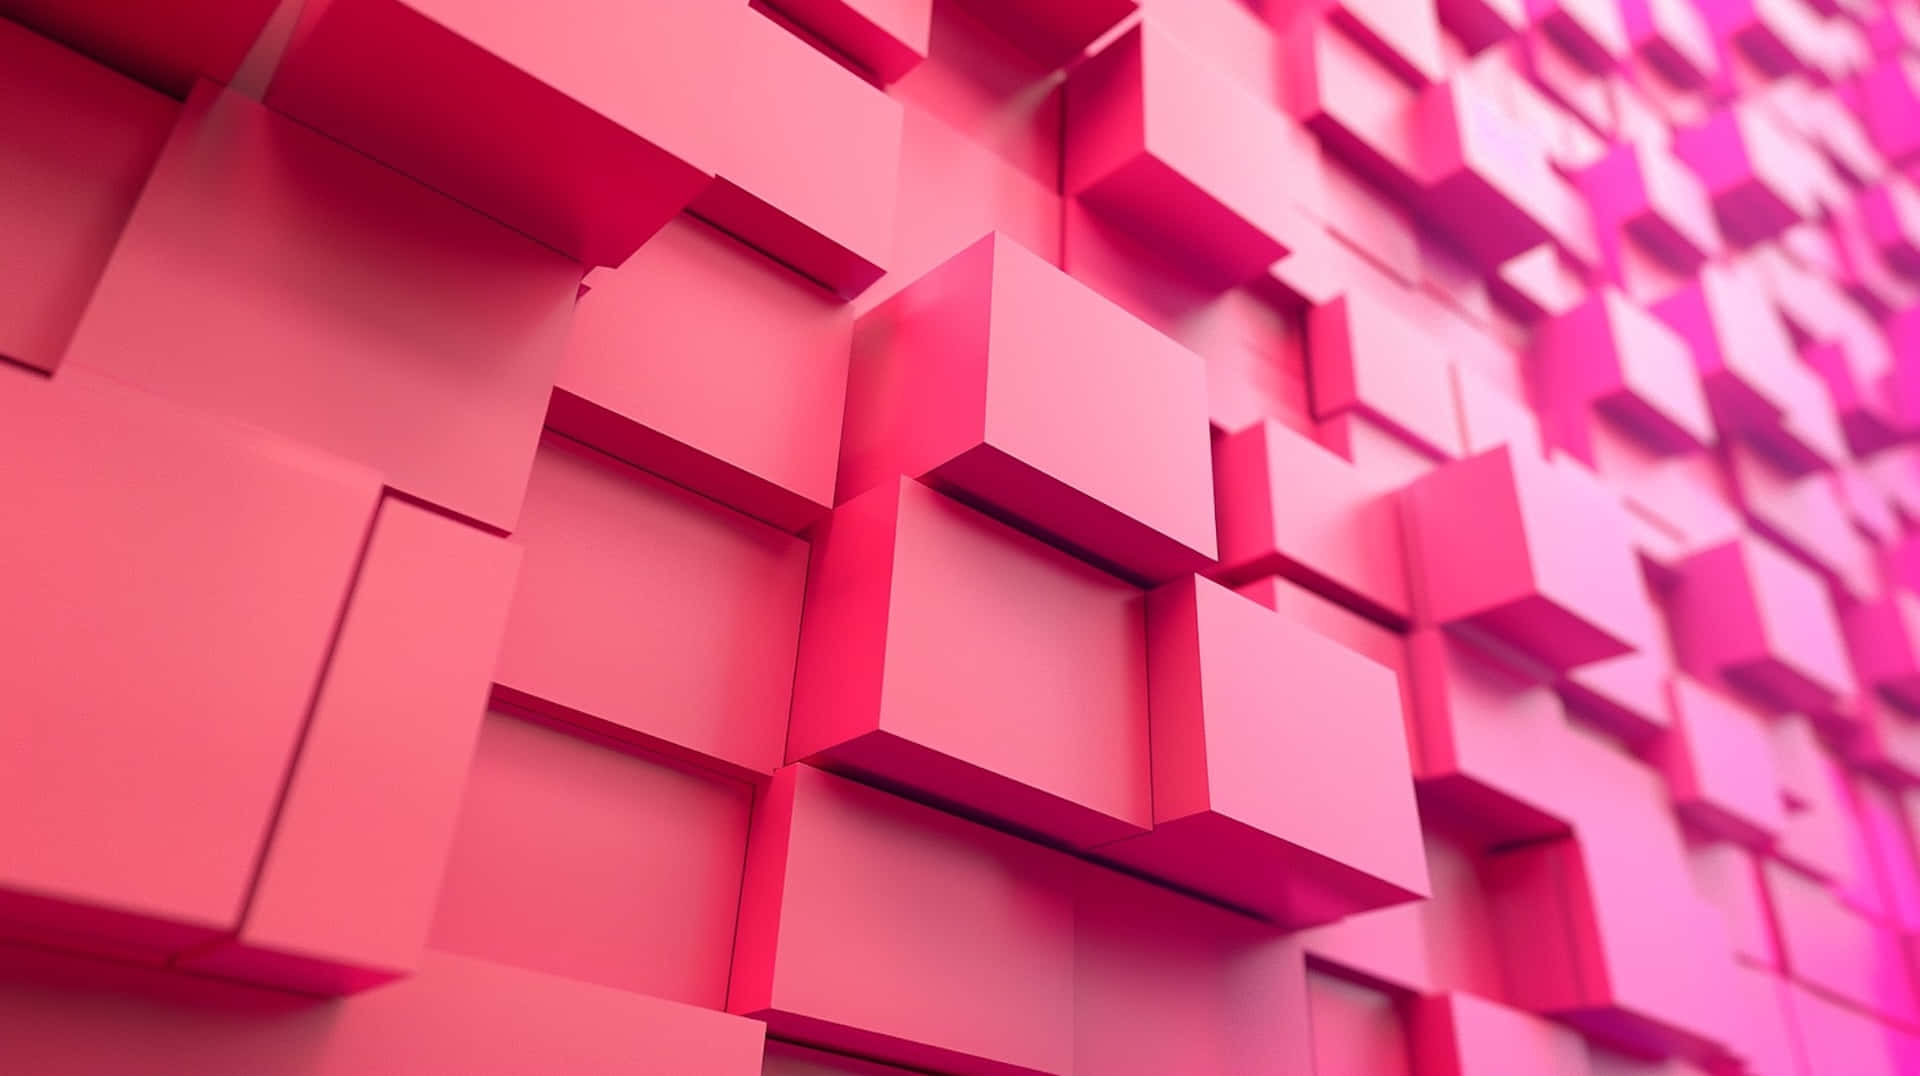 Abstract Pink3 D Blocks Pattern Wallpaper